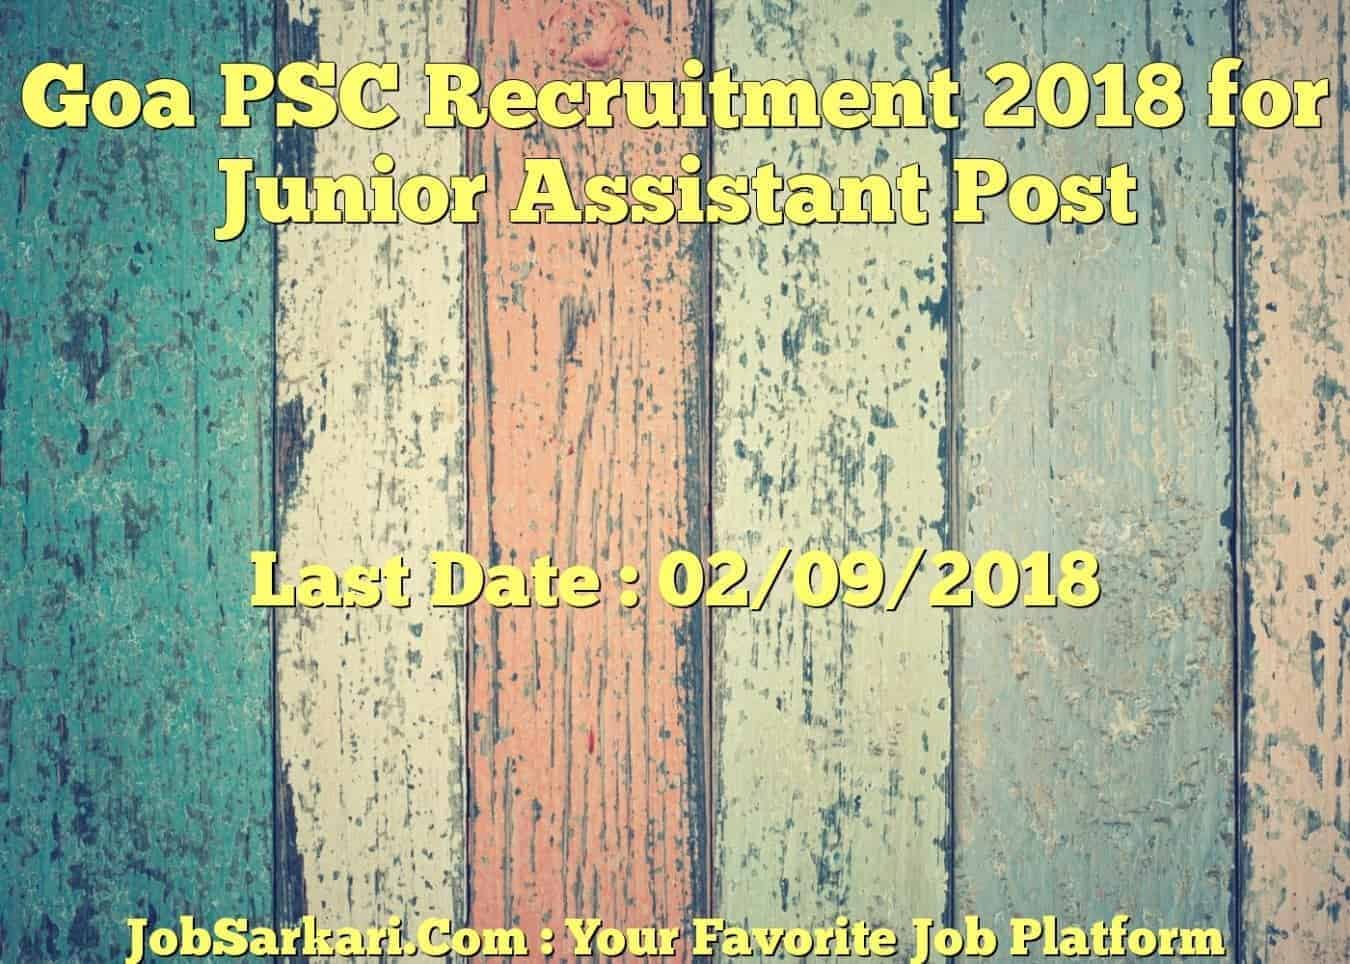 Goa PSC Recruitment 2018 for Junior Assistant Post